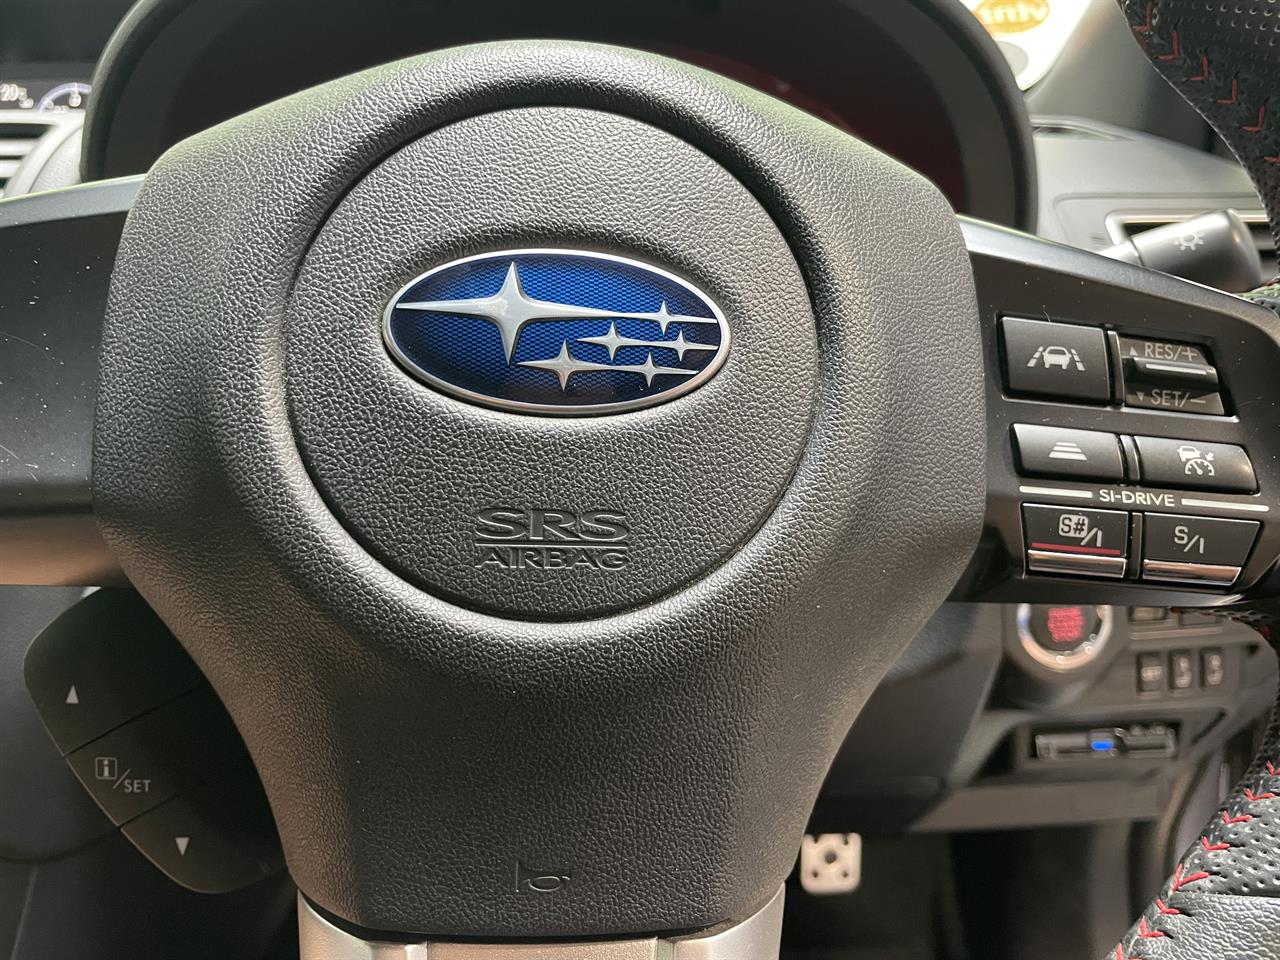 2014 Subaru wrx